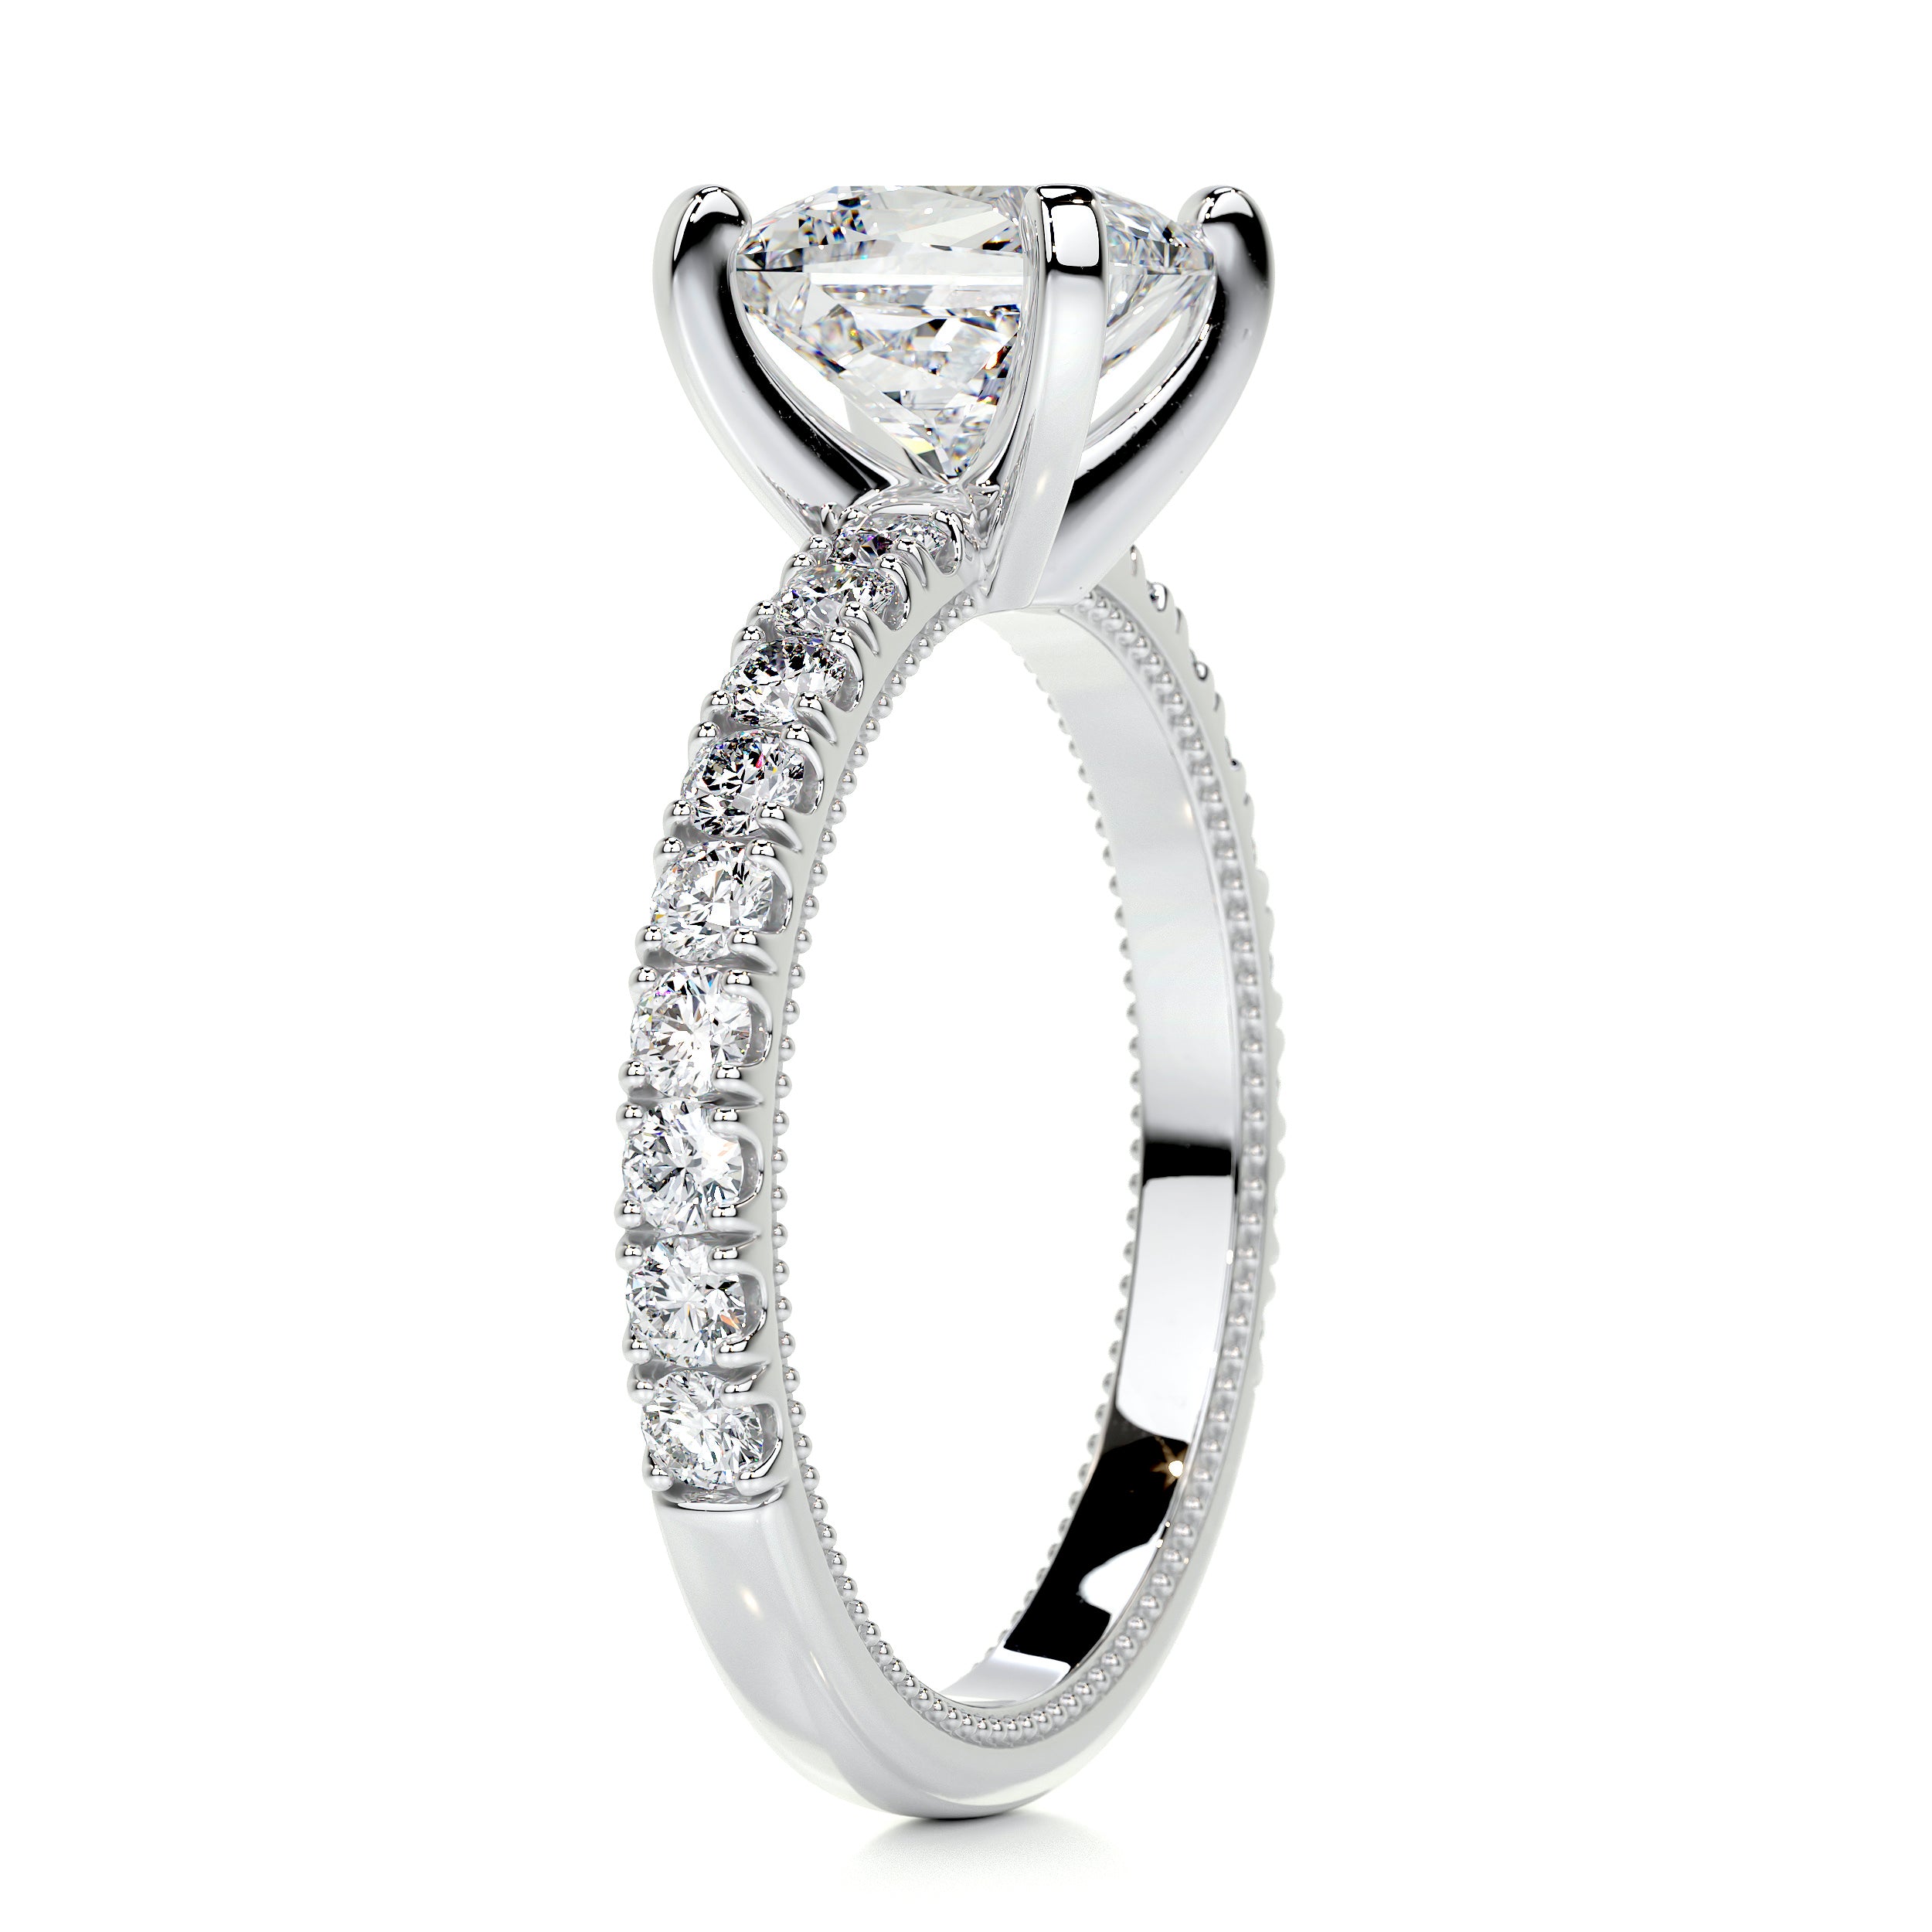 Blair Diamond Engagement Ring -14K White Gold